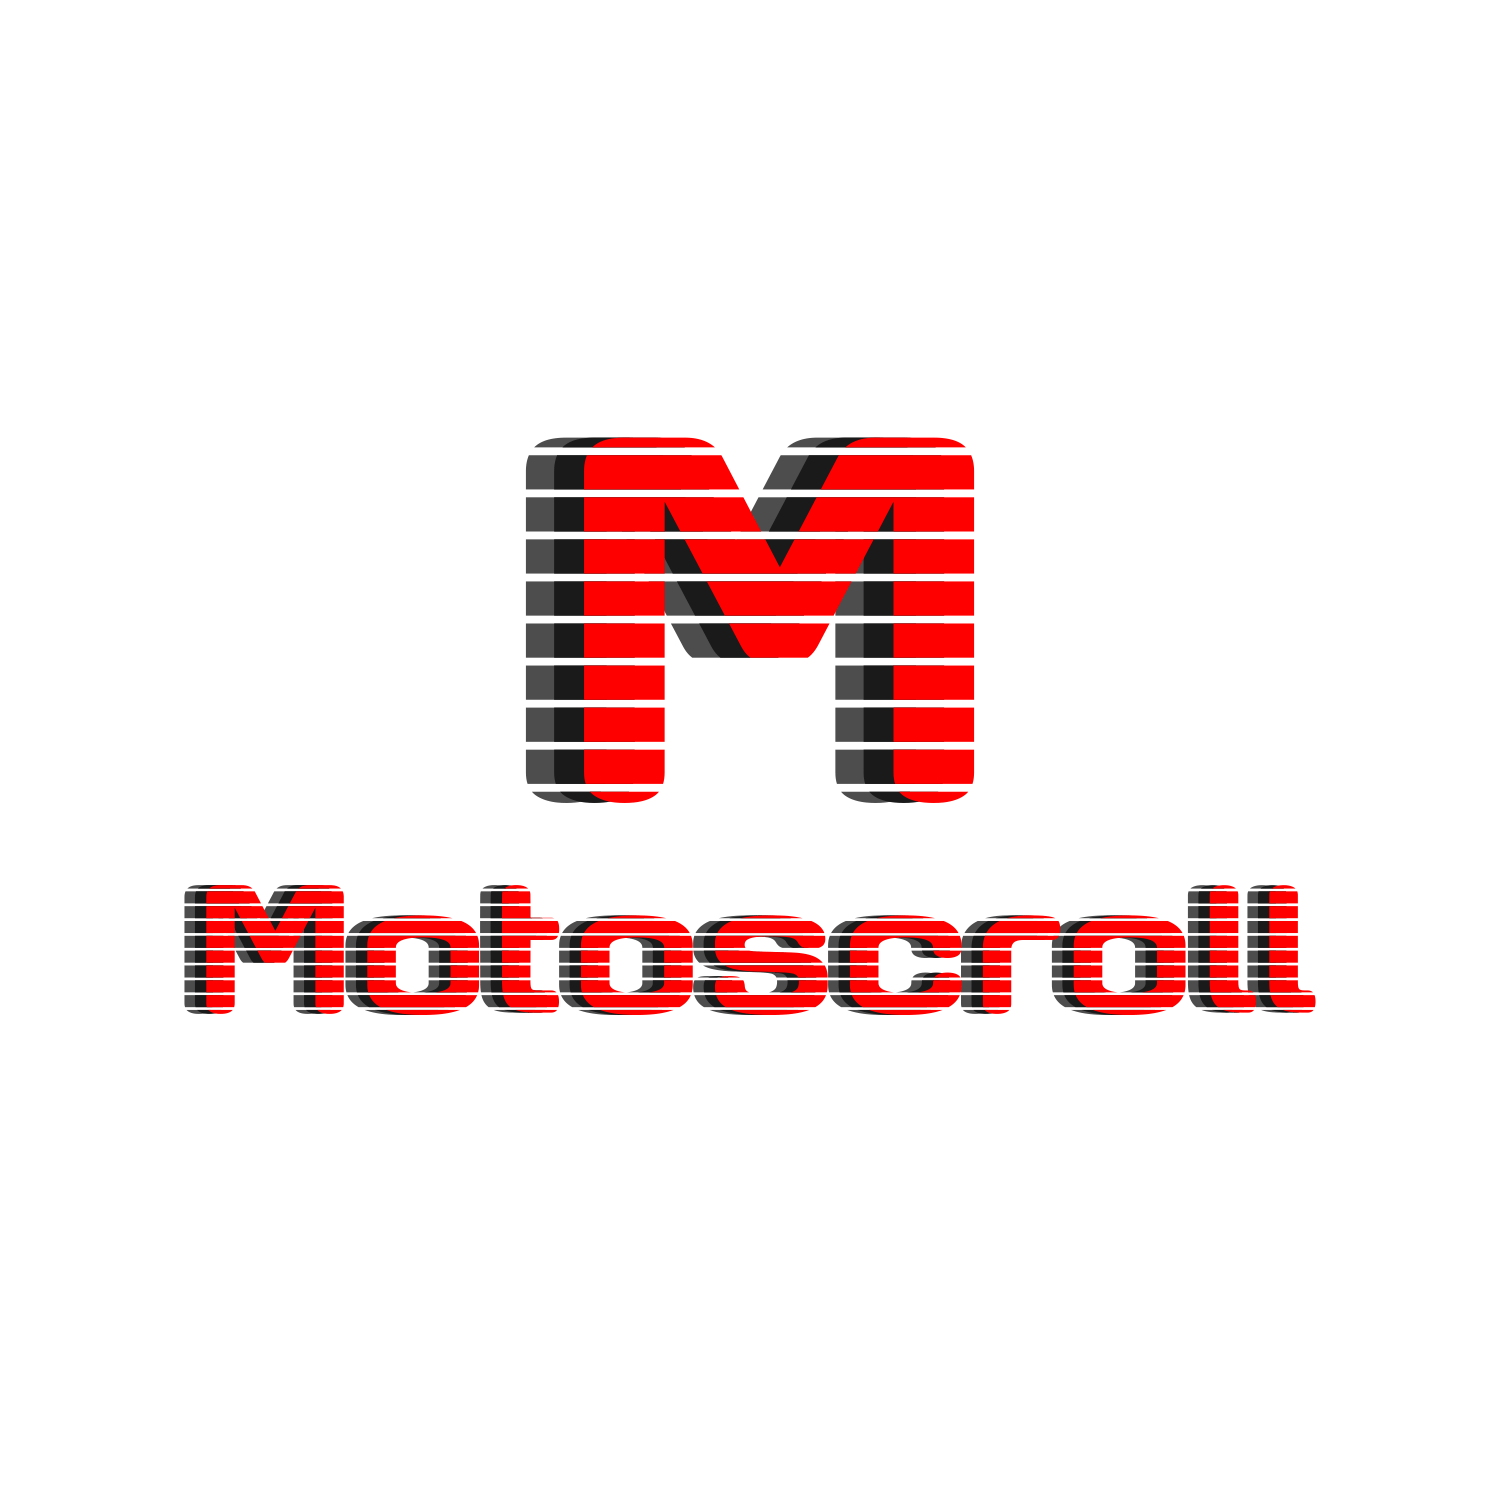 Playful Logo - Elegant, Playful Logo Design for Motoscroll by sahdieng. Design